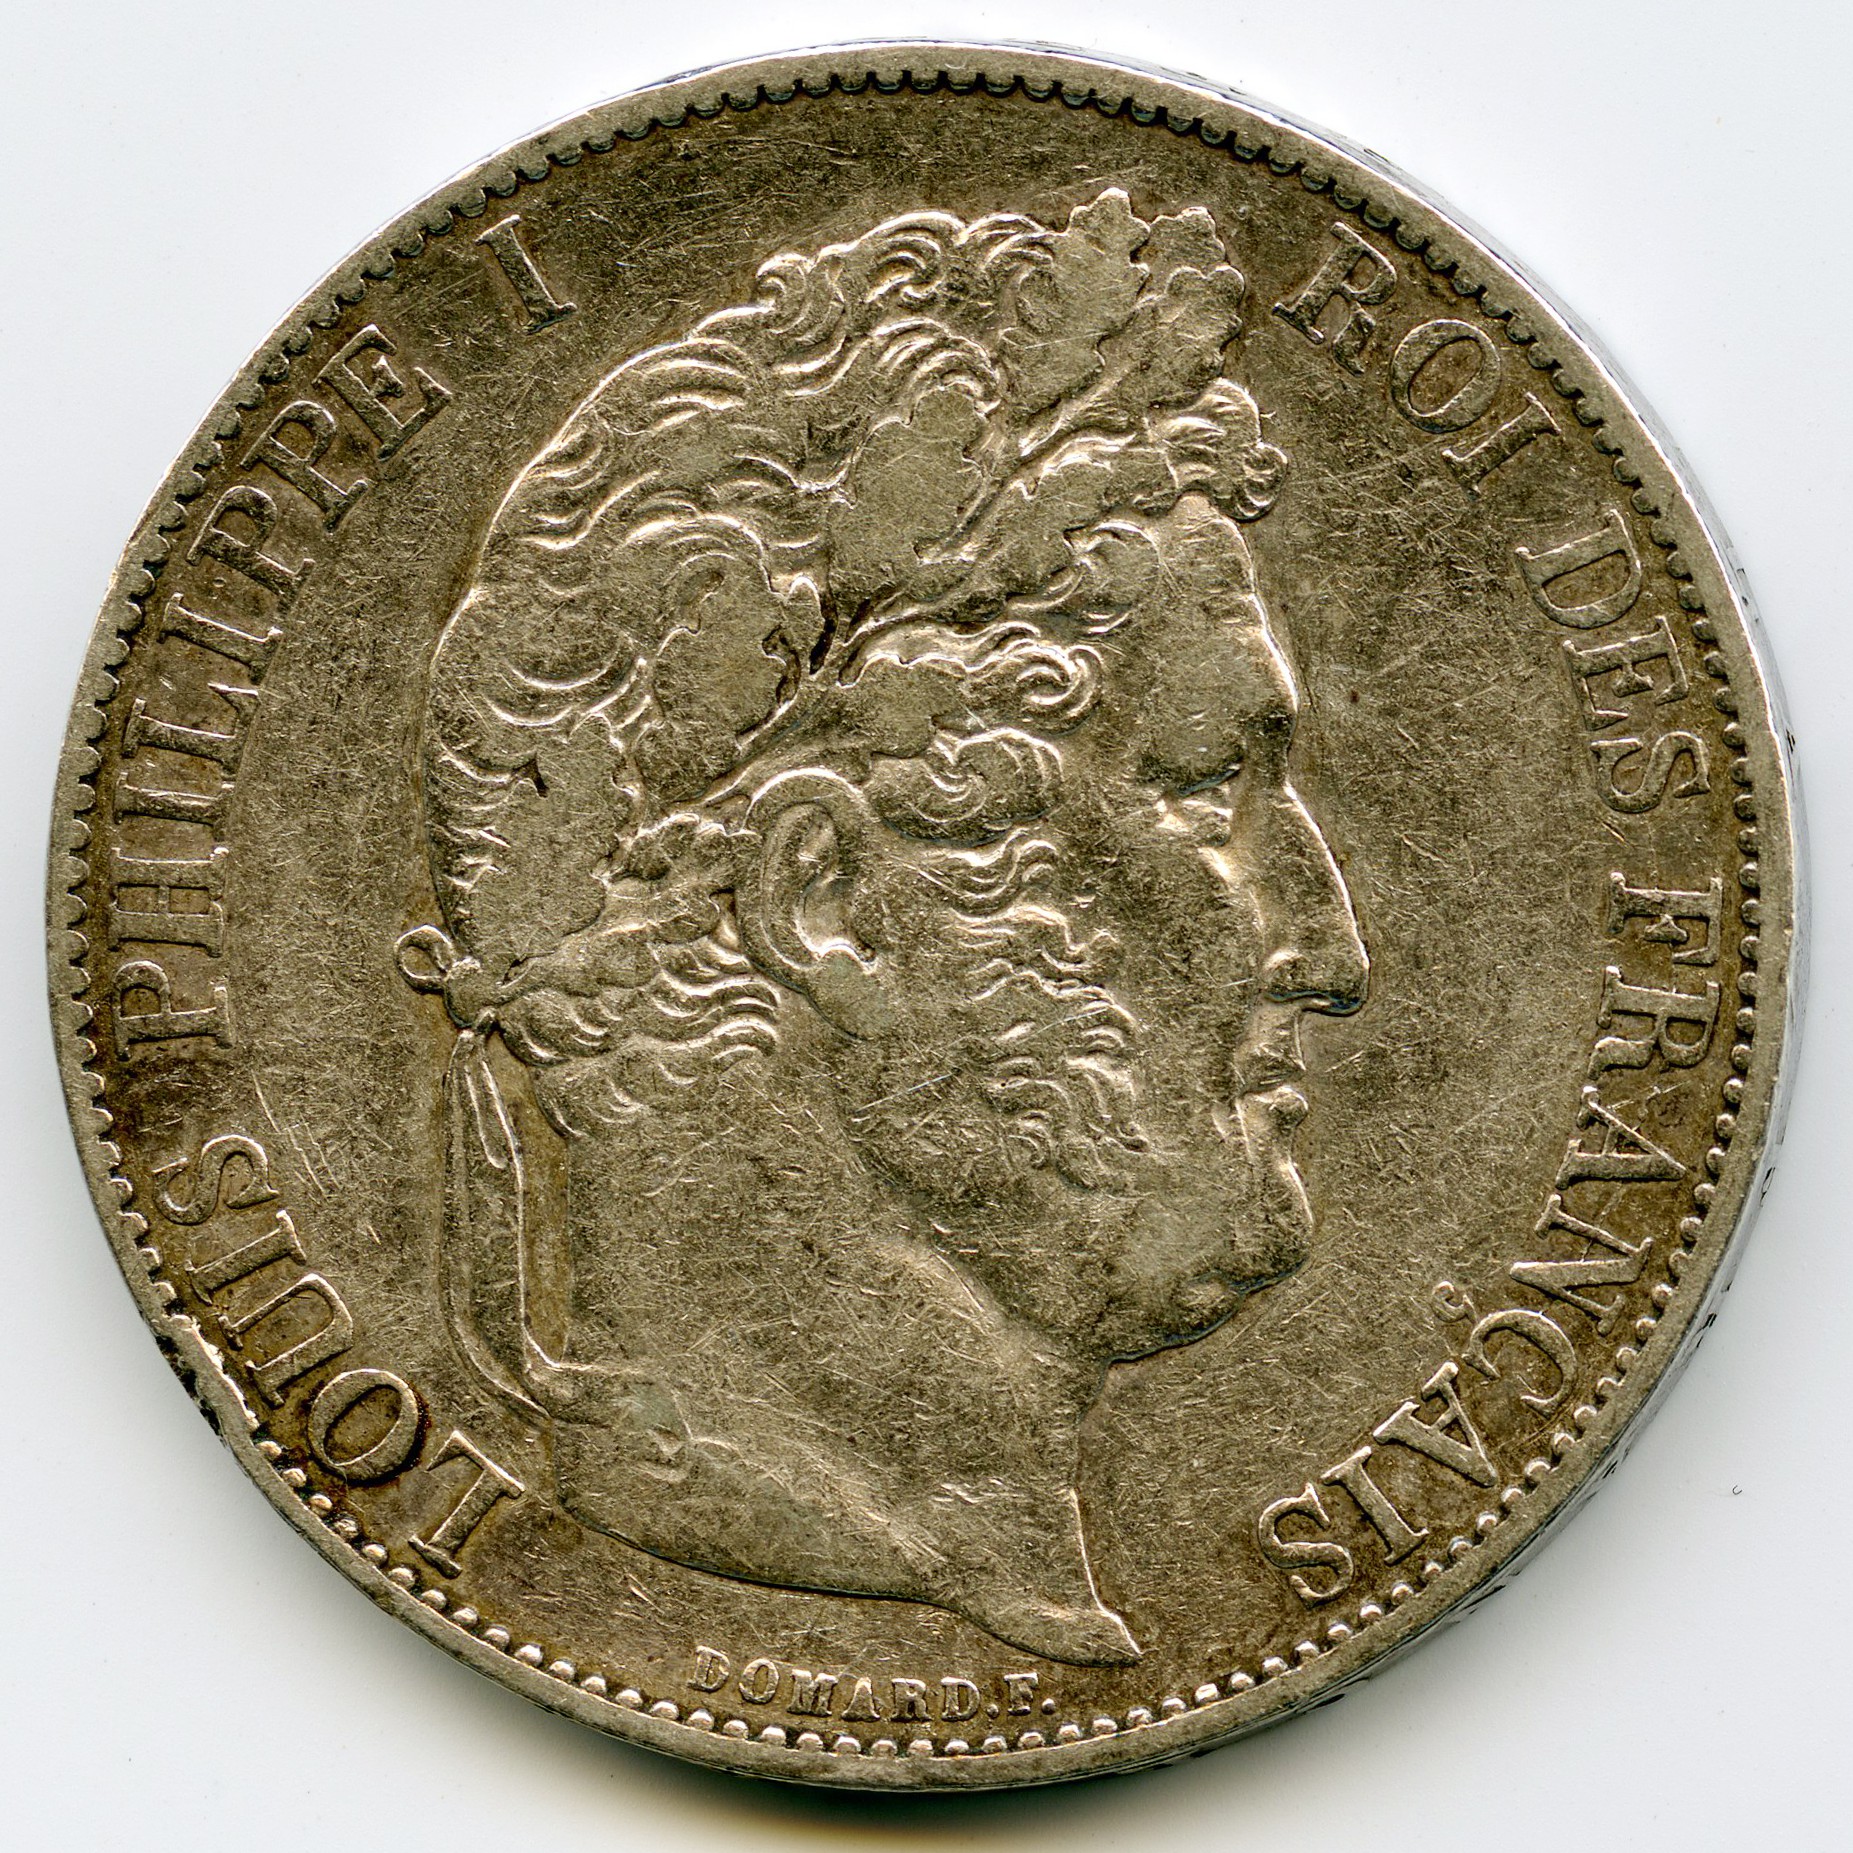 Loius-Philippe I - 5 Francs - 1845 W avers